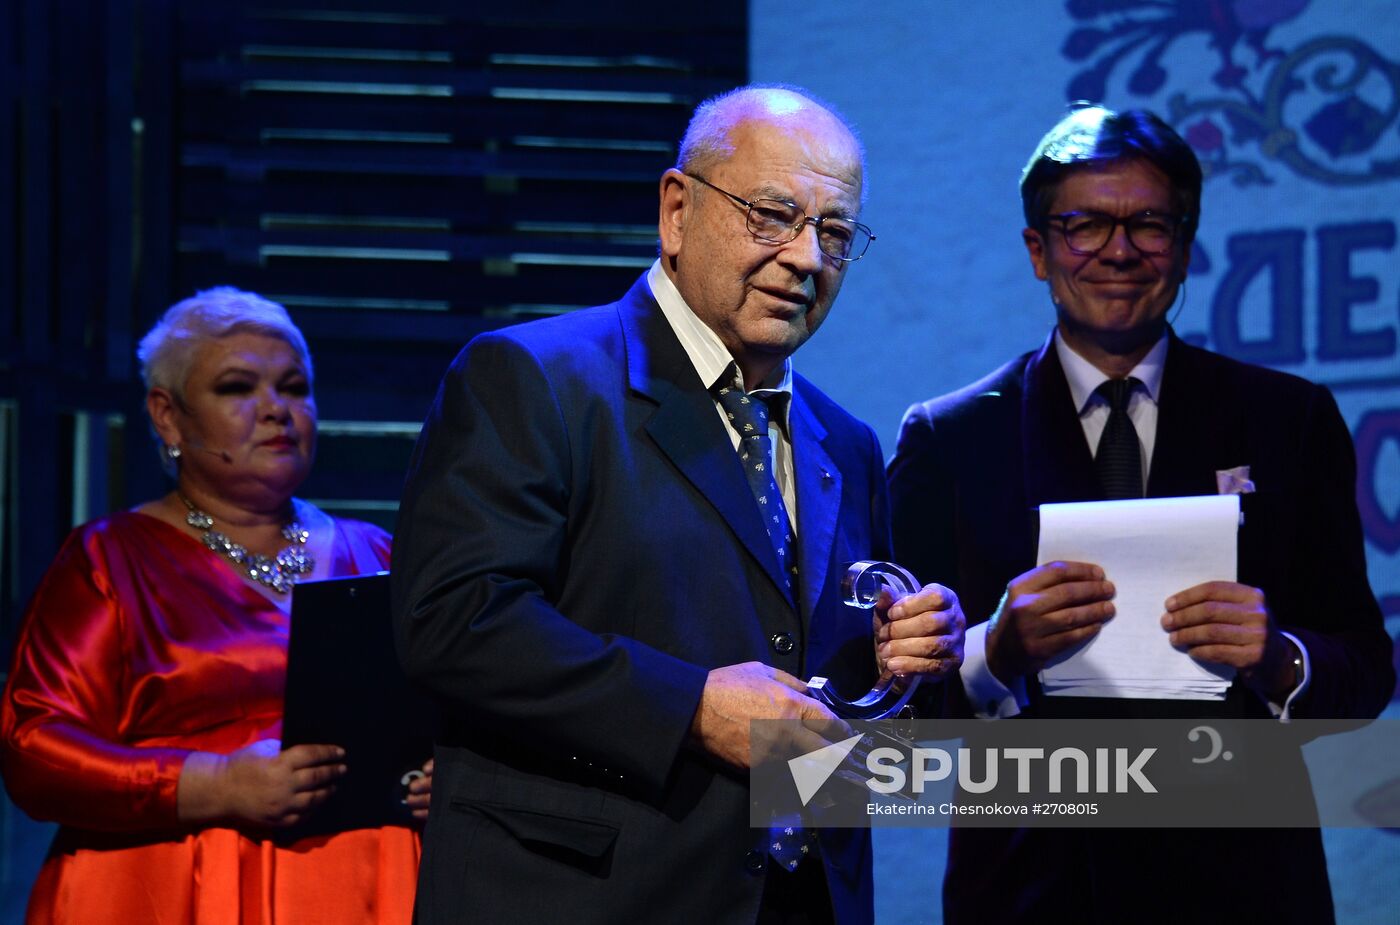 Snob "Made in Russia" award ceremony